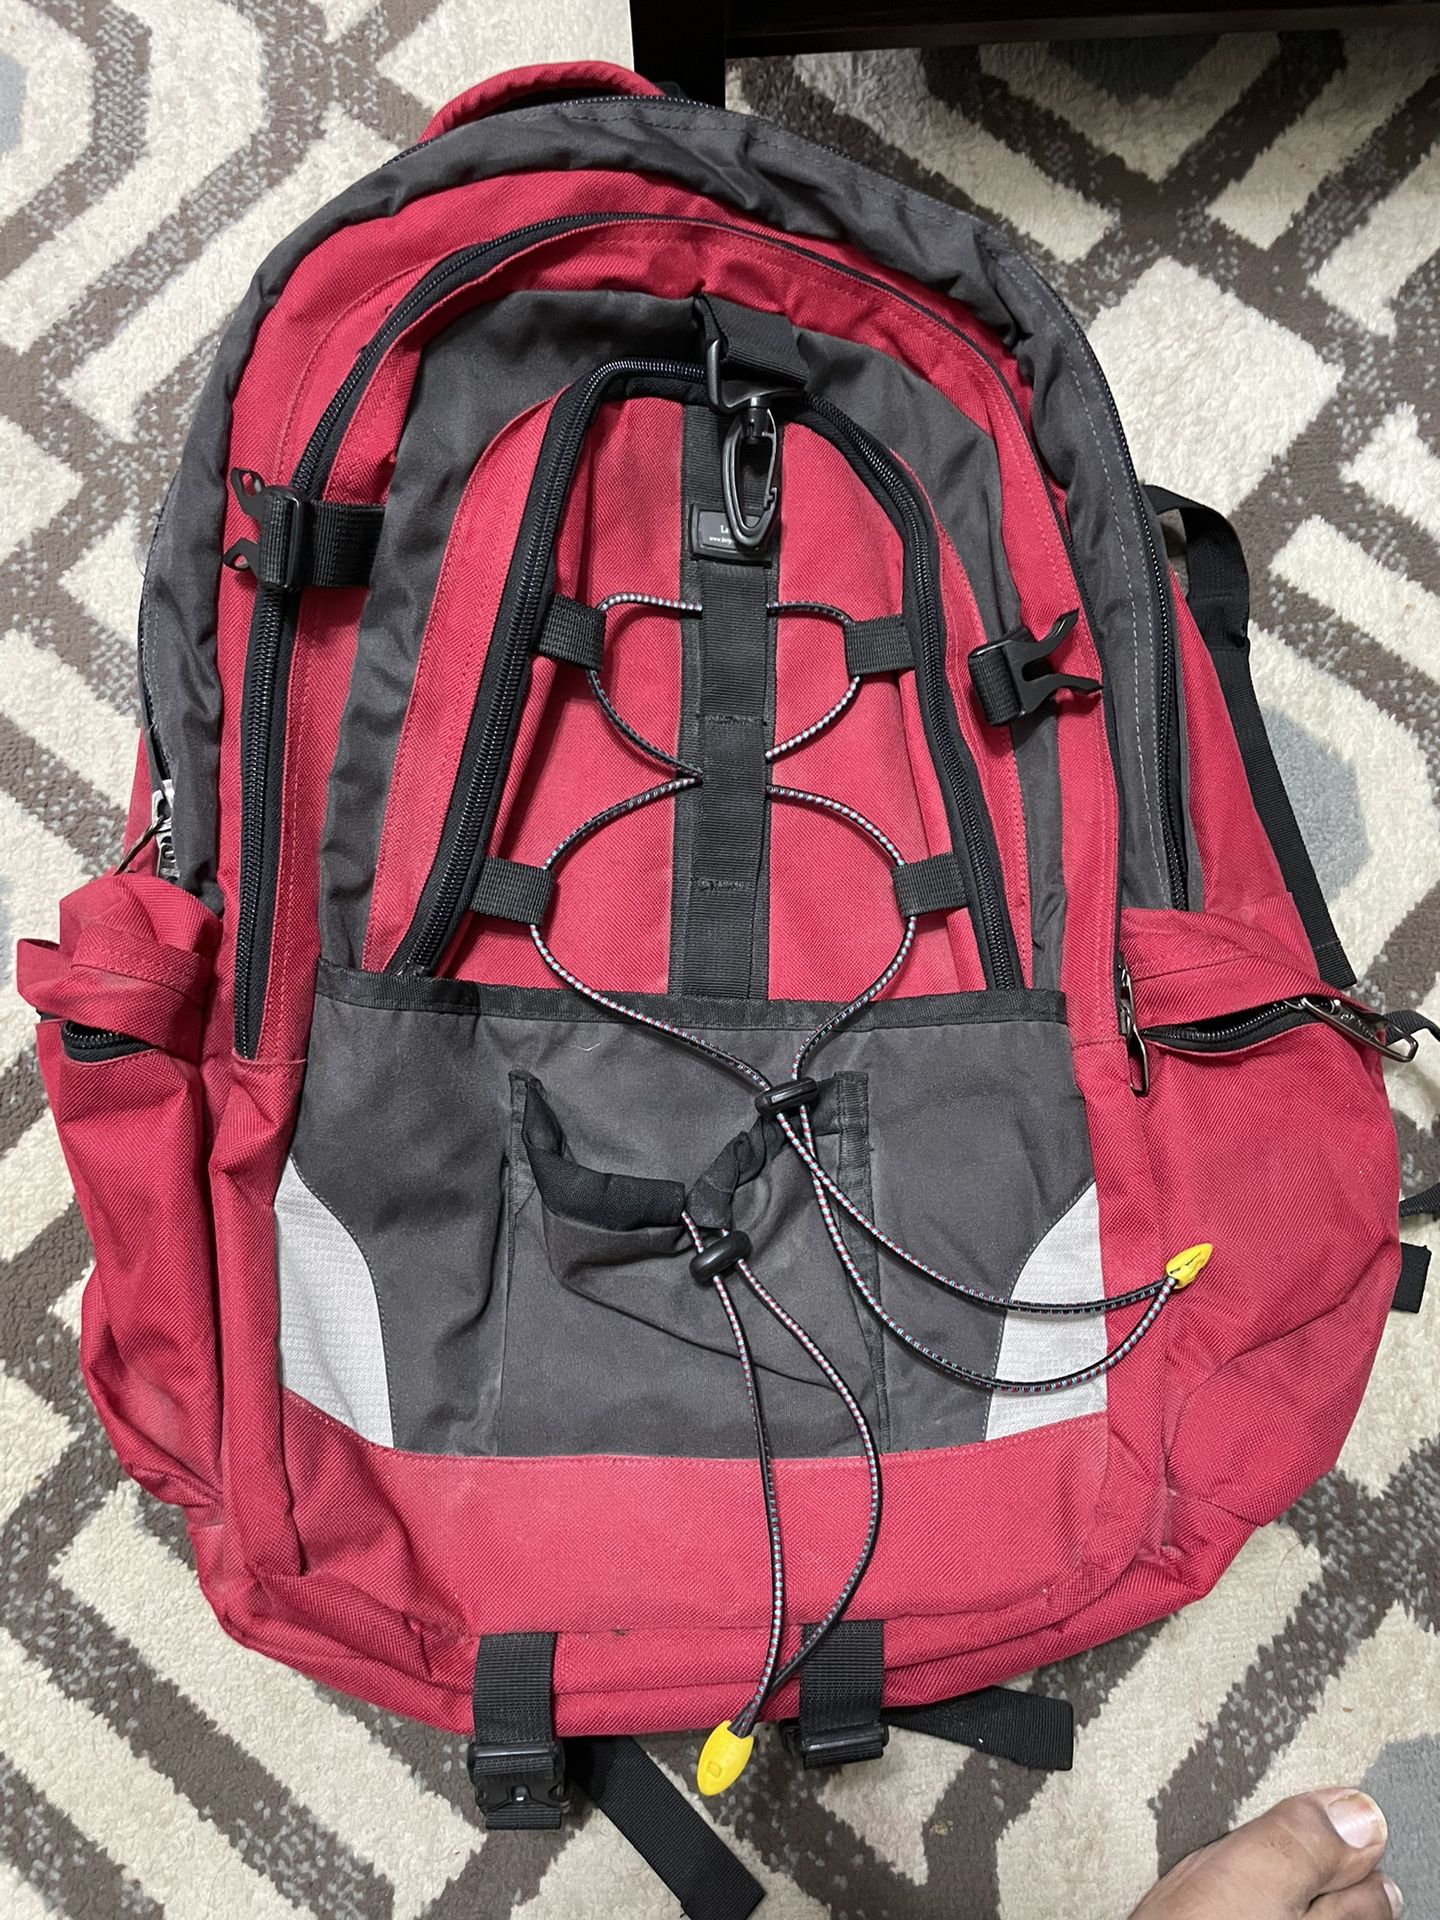 Large multipurpose backpack